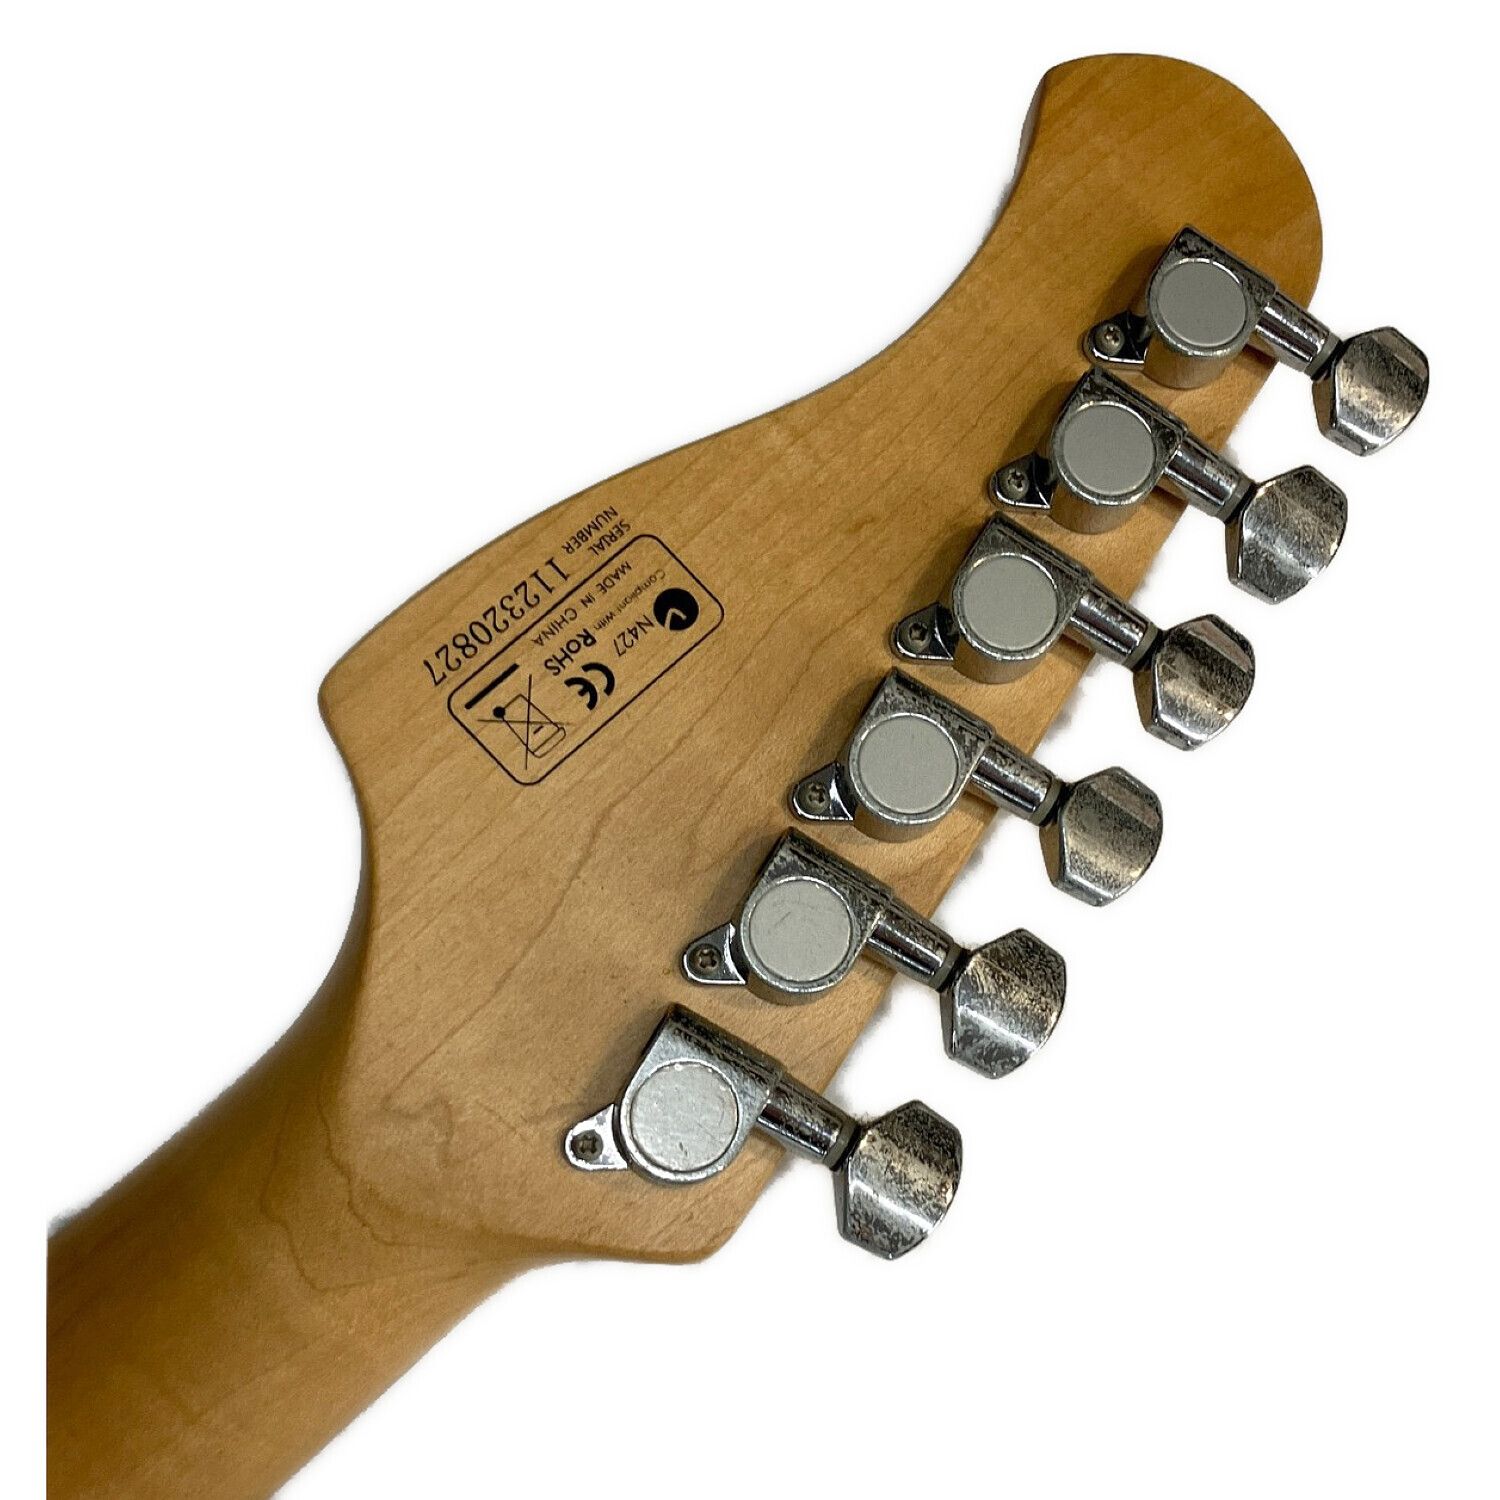 Elioth 「B305 NS」(改)エレアコ楽器 - アコースティックギター